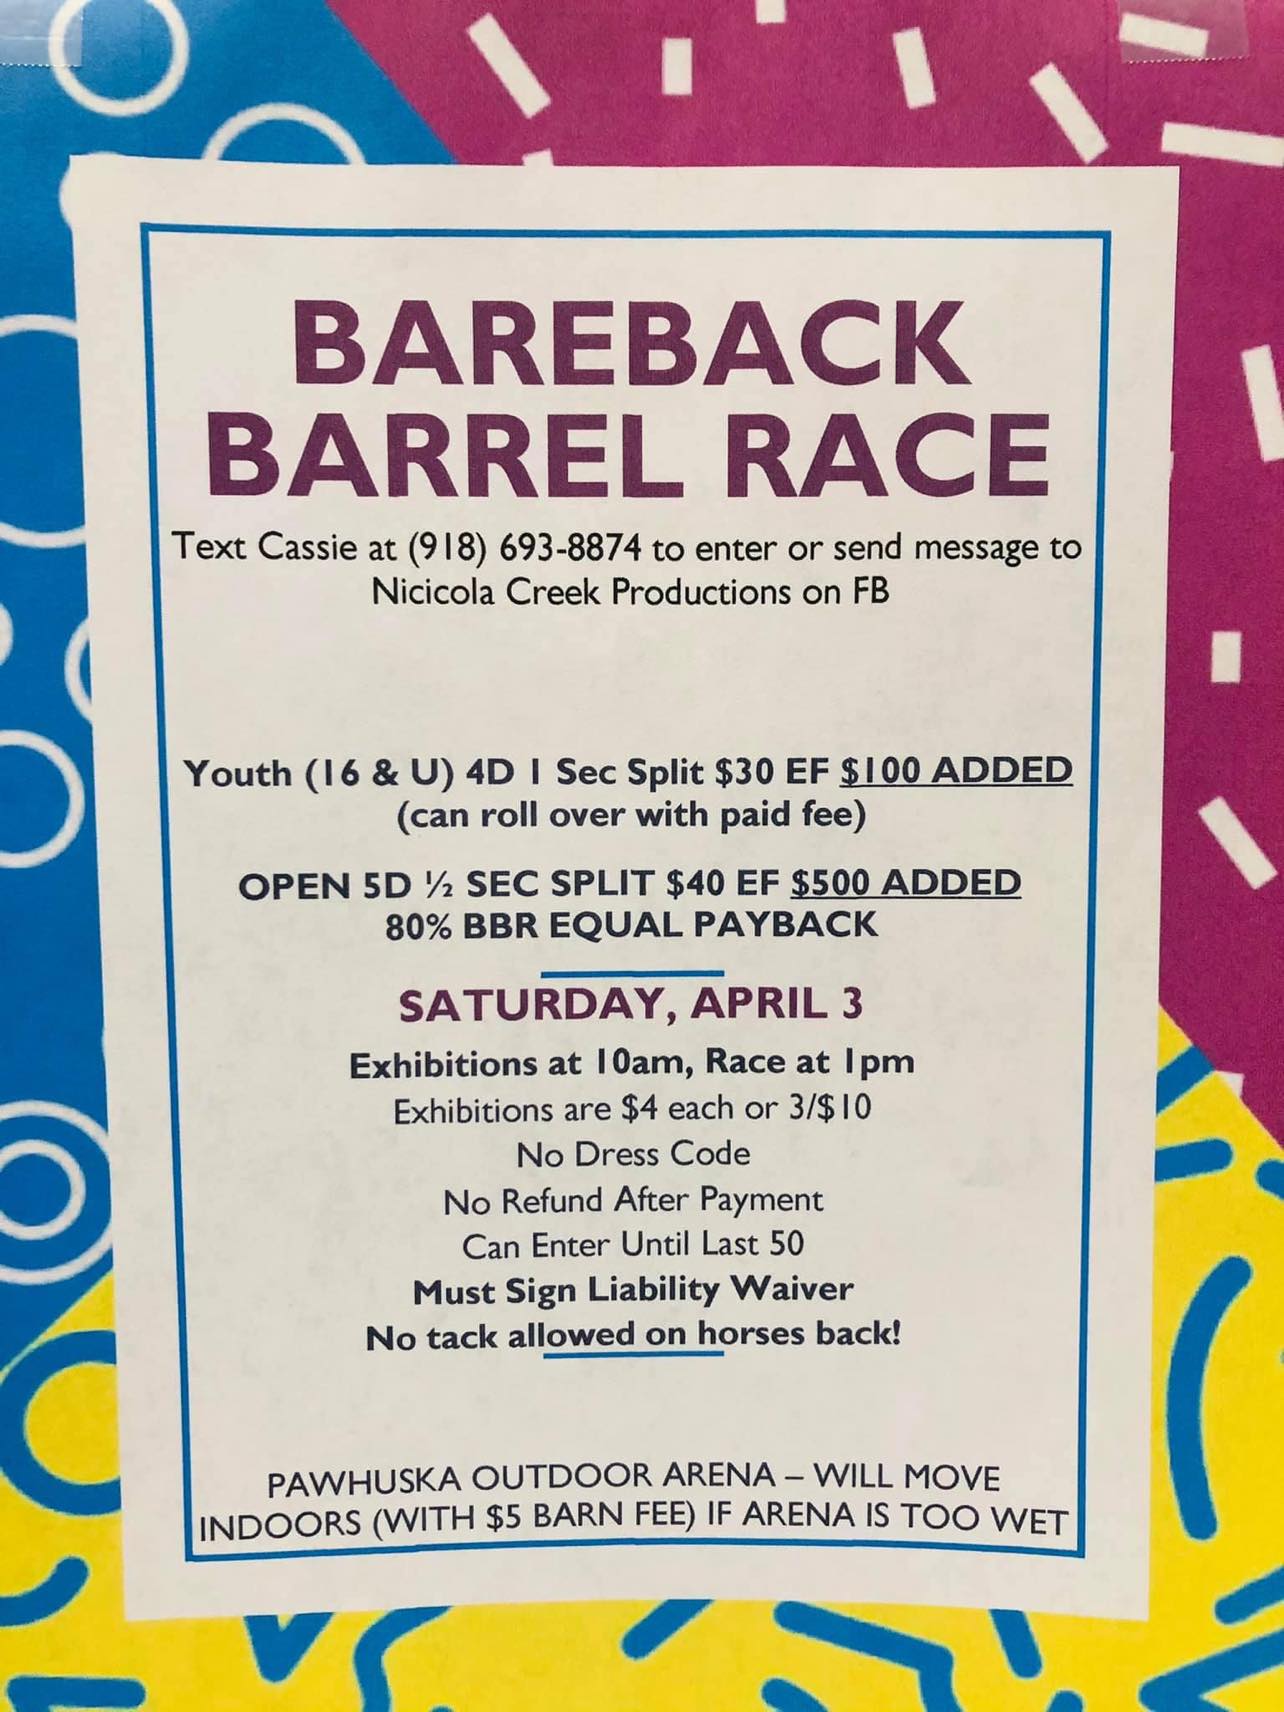 Open 5D & Bareback Barrel Race